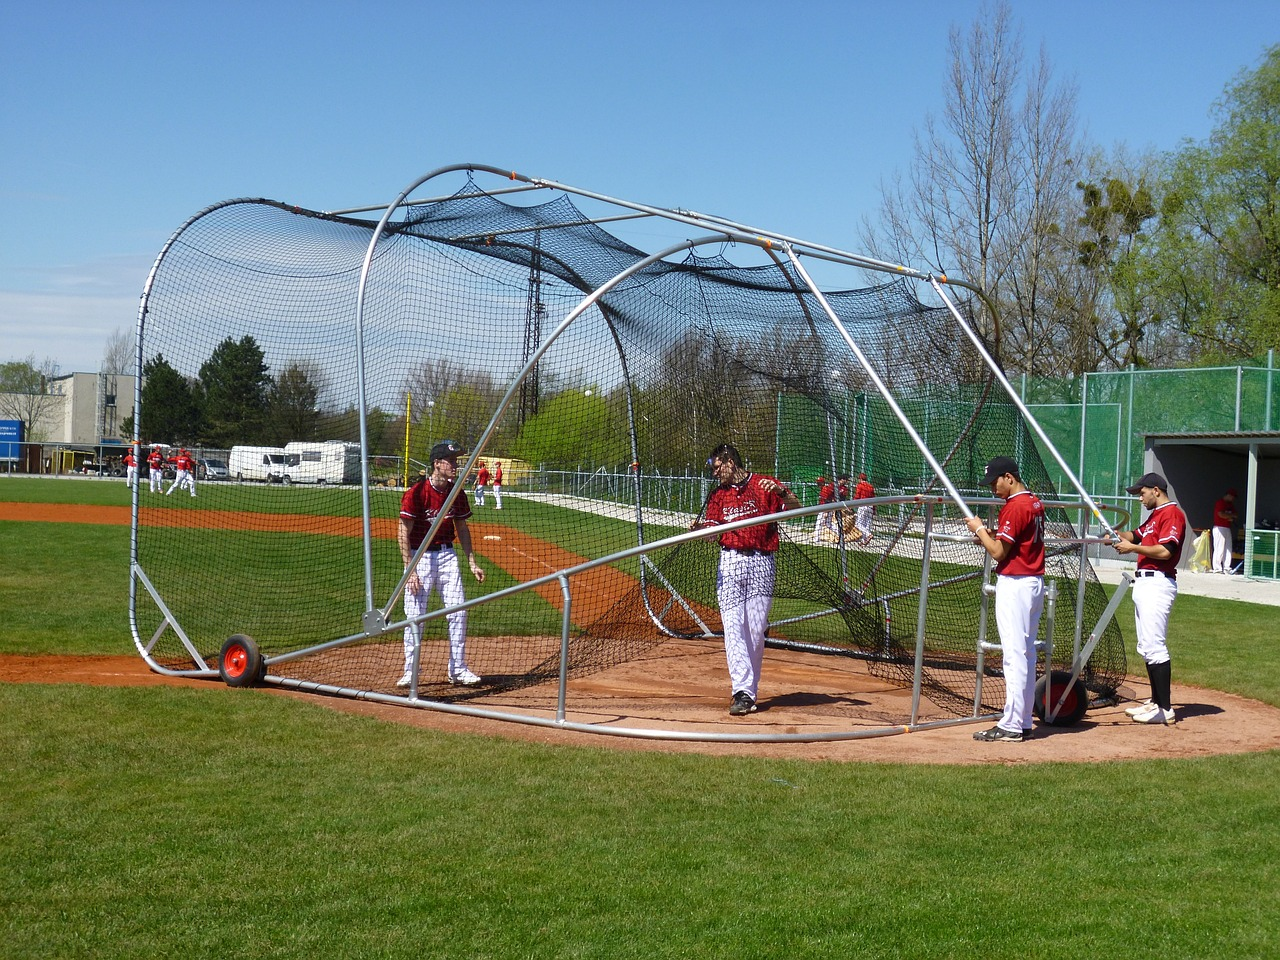 A semi-enclosed batting cage in a backyard